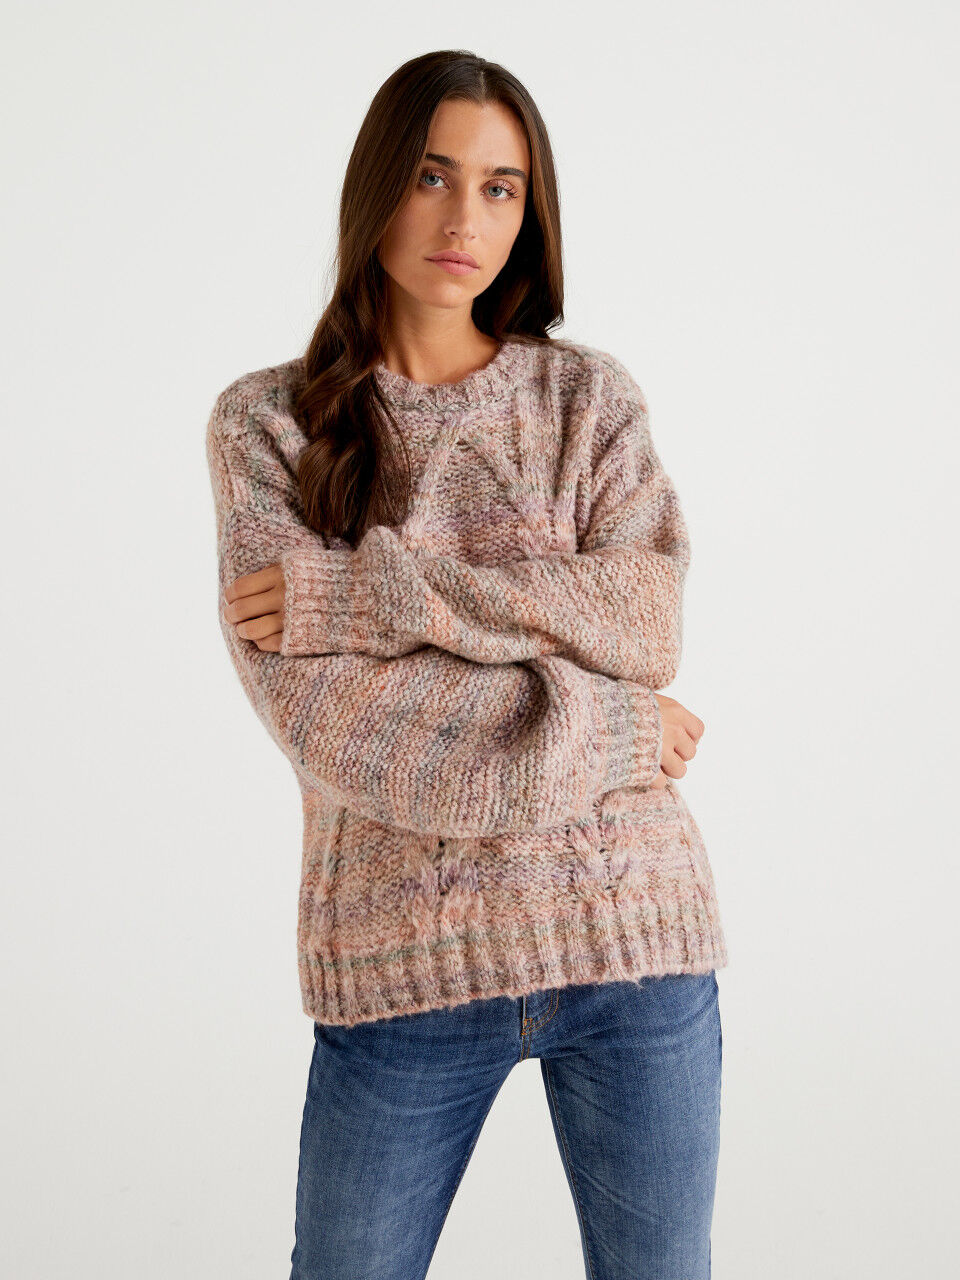 Multicolored boxy fit sweater